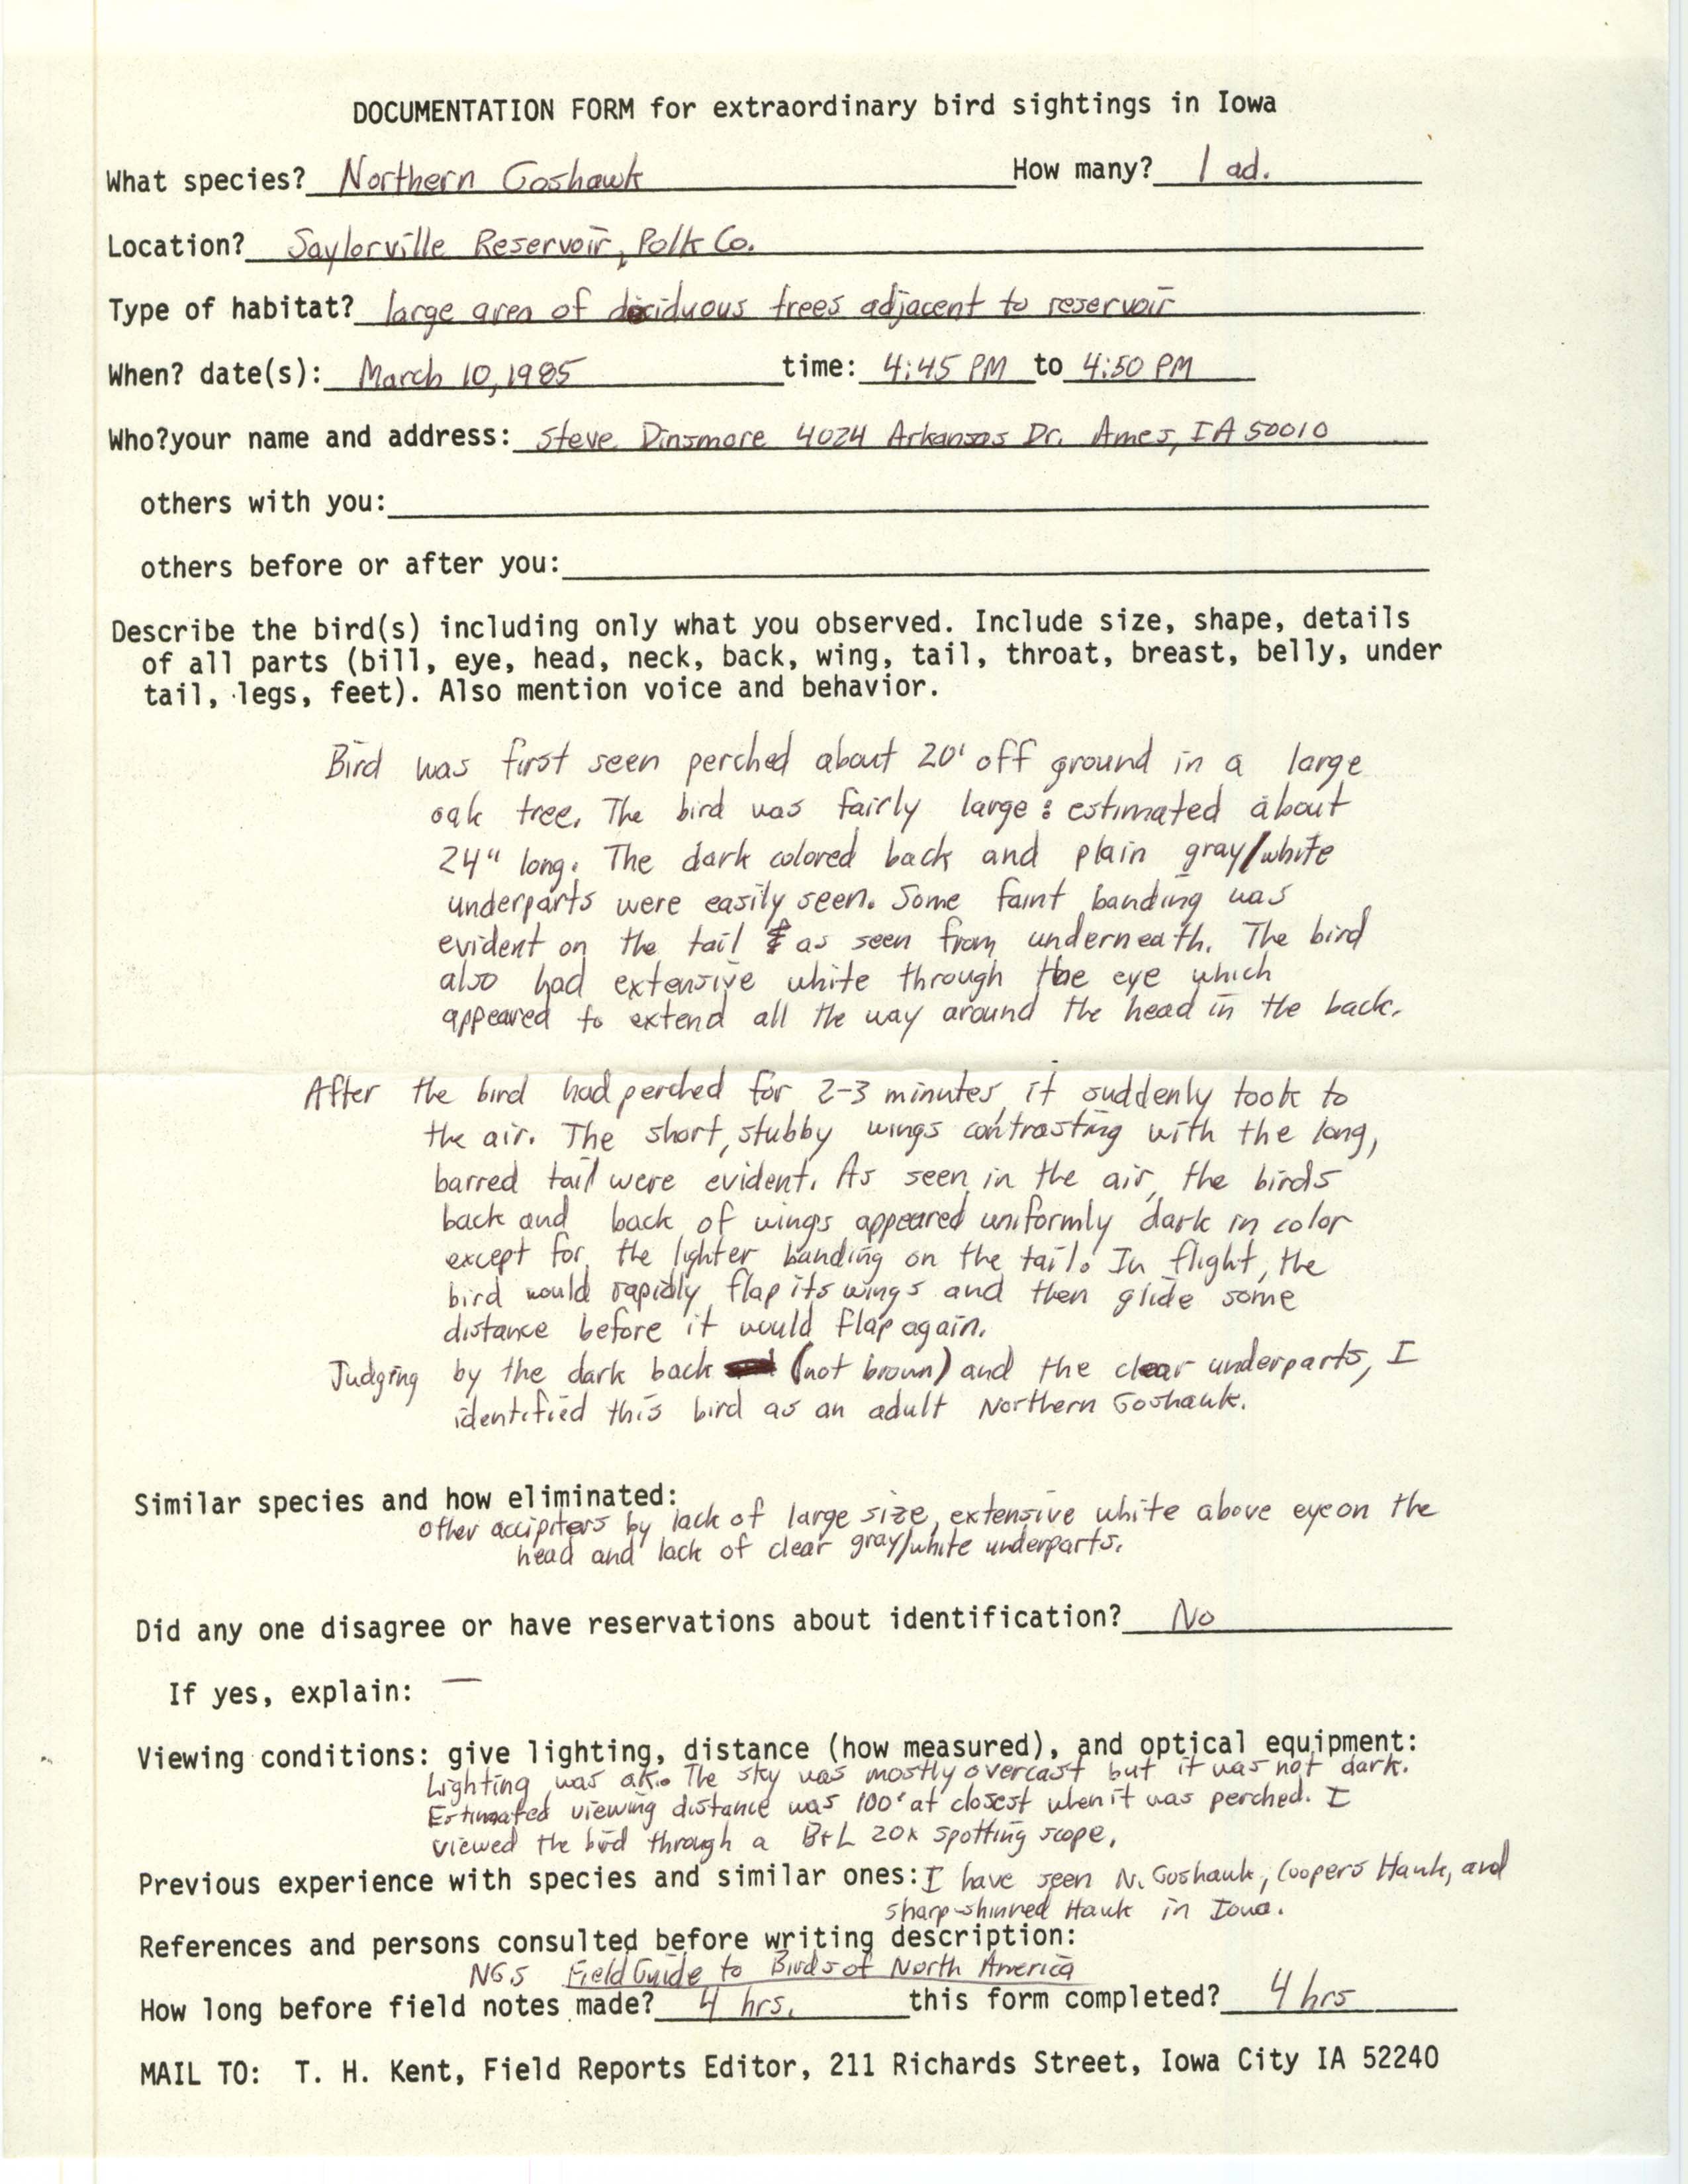 Rare bird documentation form for Northern Goshawk at Saylorville Reservoir, 1985